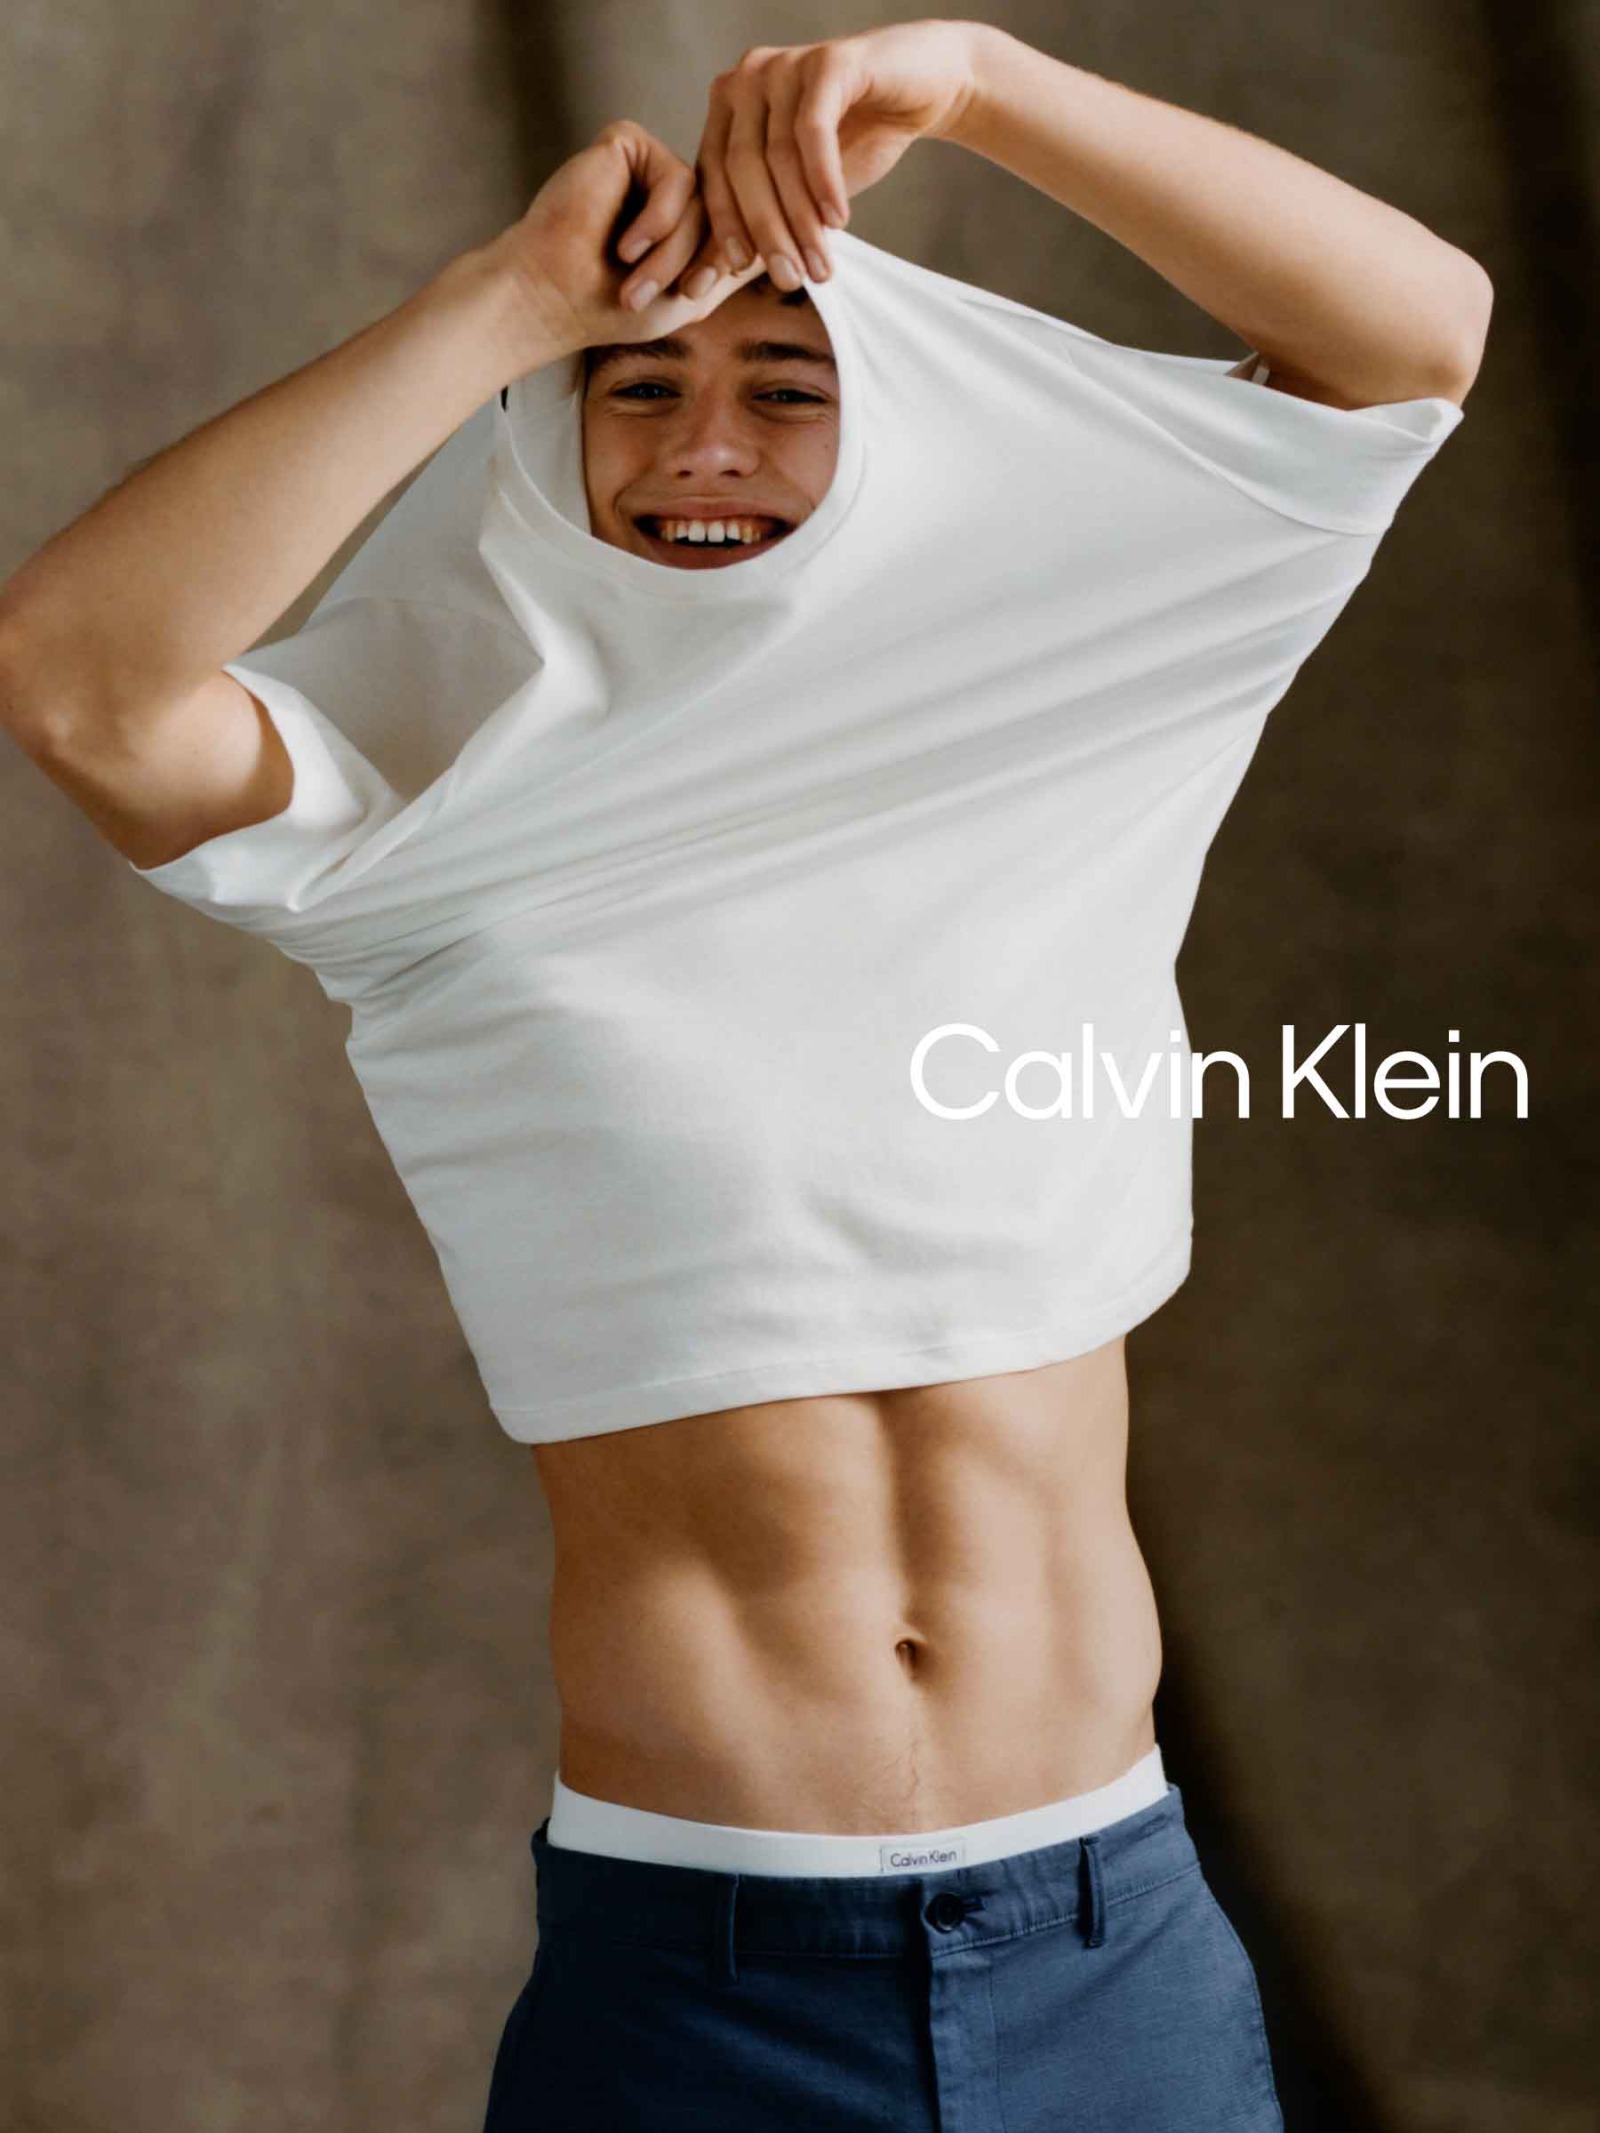 Calvin Klein 8 by Paul Maximilian SCHLOSSER